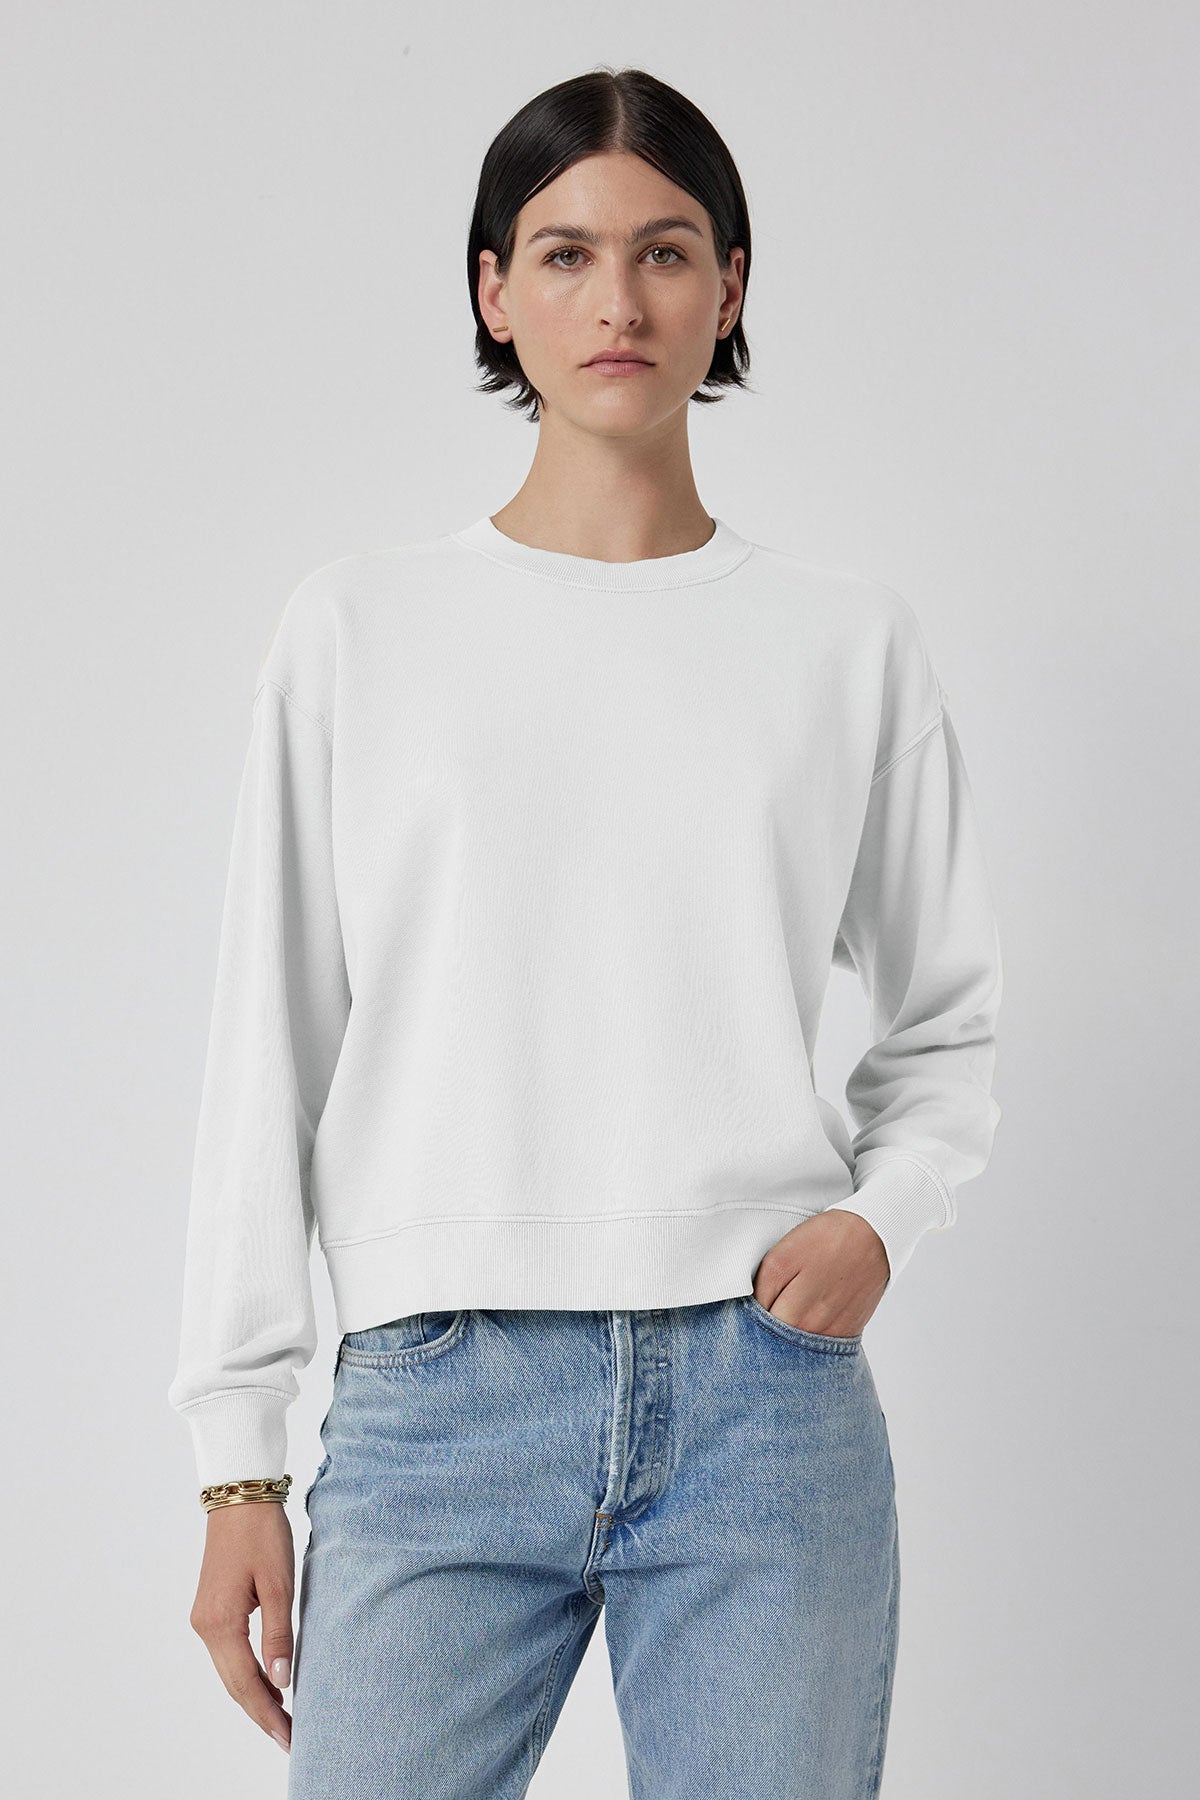   The model is wearing a Velvet by Jenny Graham YNEZ sweatshirt and jeans. 